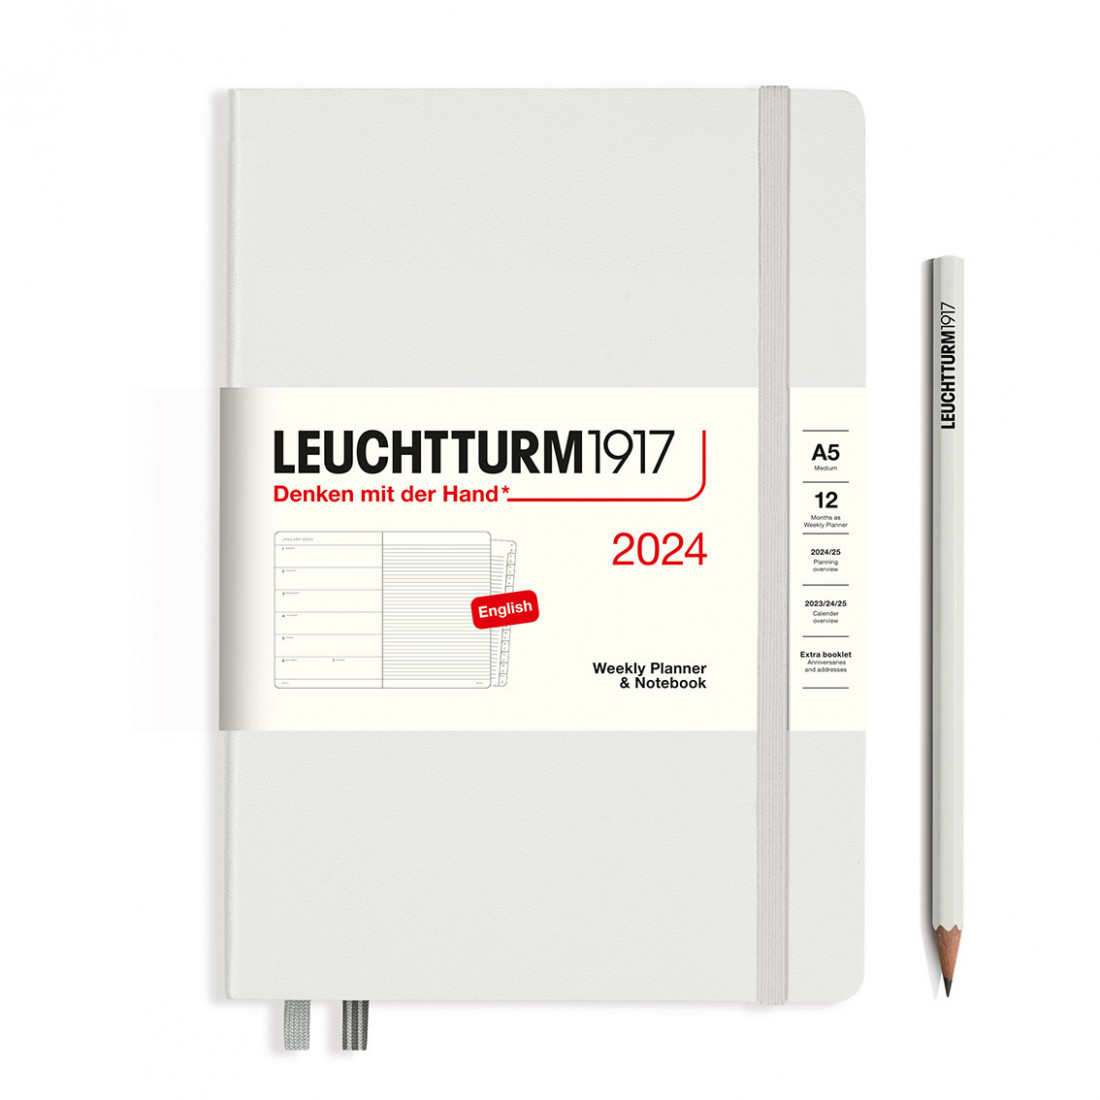 Leuchtturm 1917 Weekly Planner and Notebook 2024 Light Grey Medium A5 Hard Cover